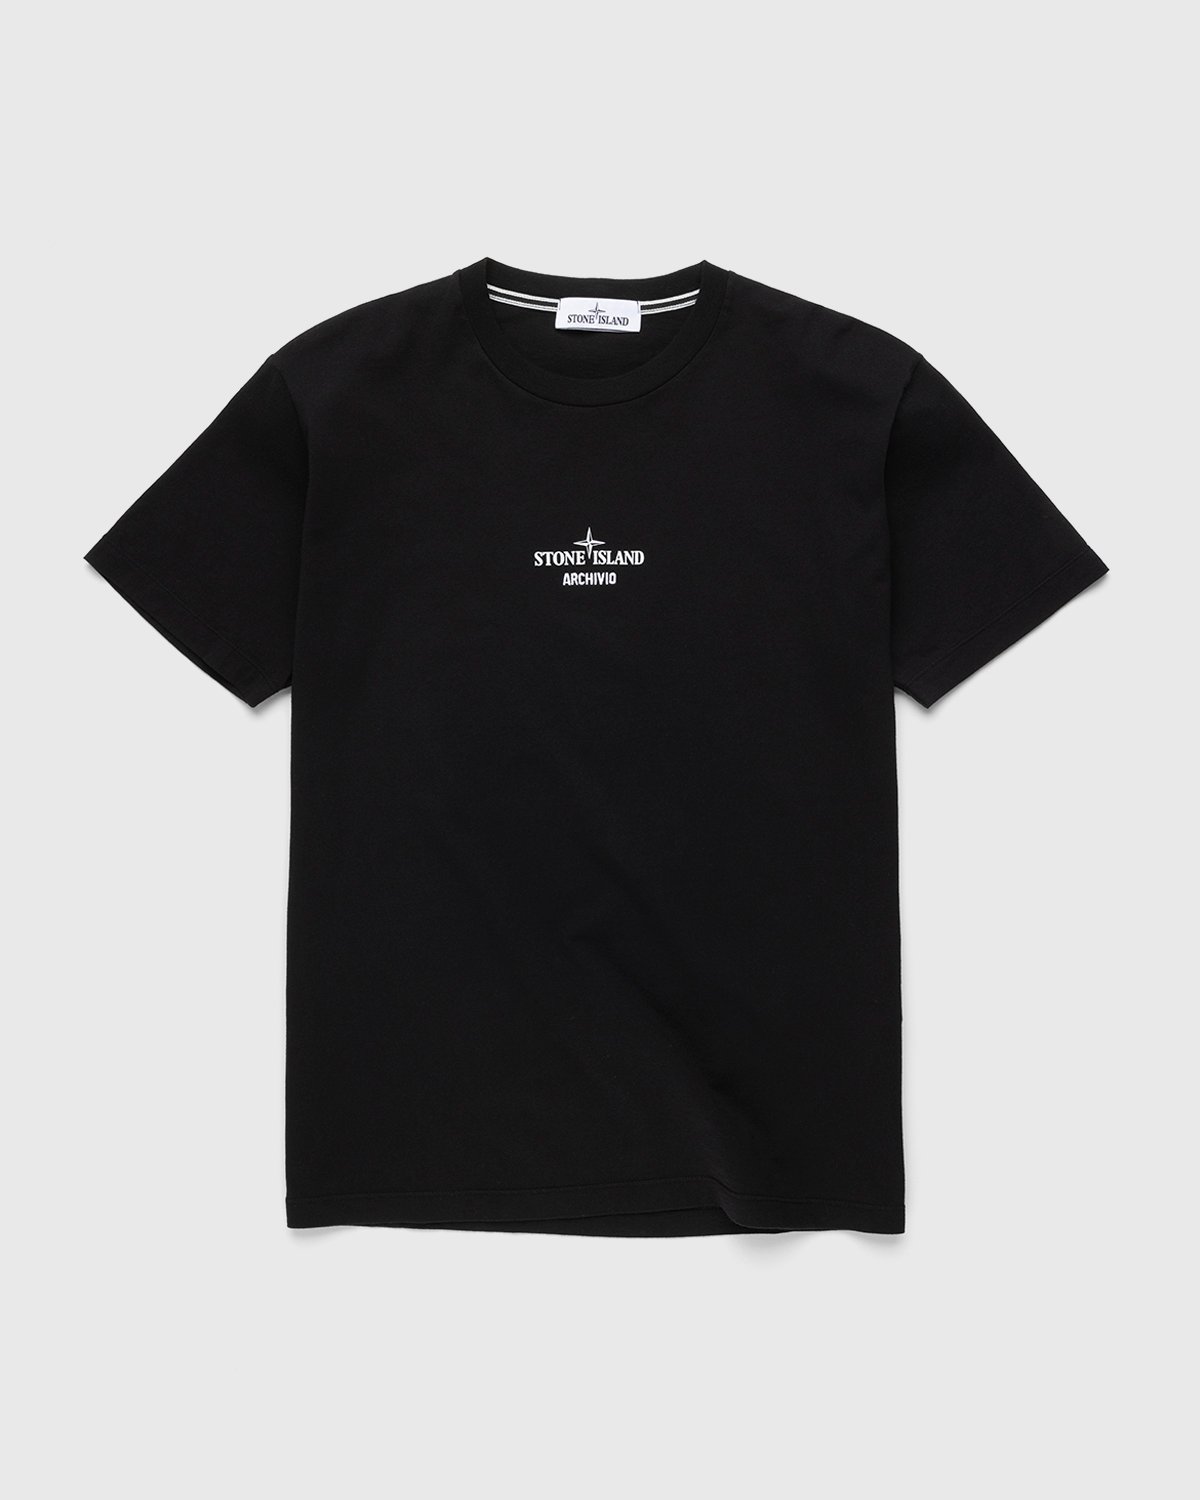 Stone Island - 2NS91 Garment-Dyed Archivio T-Shirt Black - Clothing - Black - Image 1